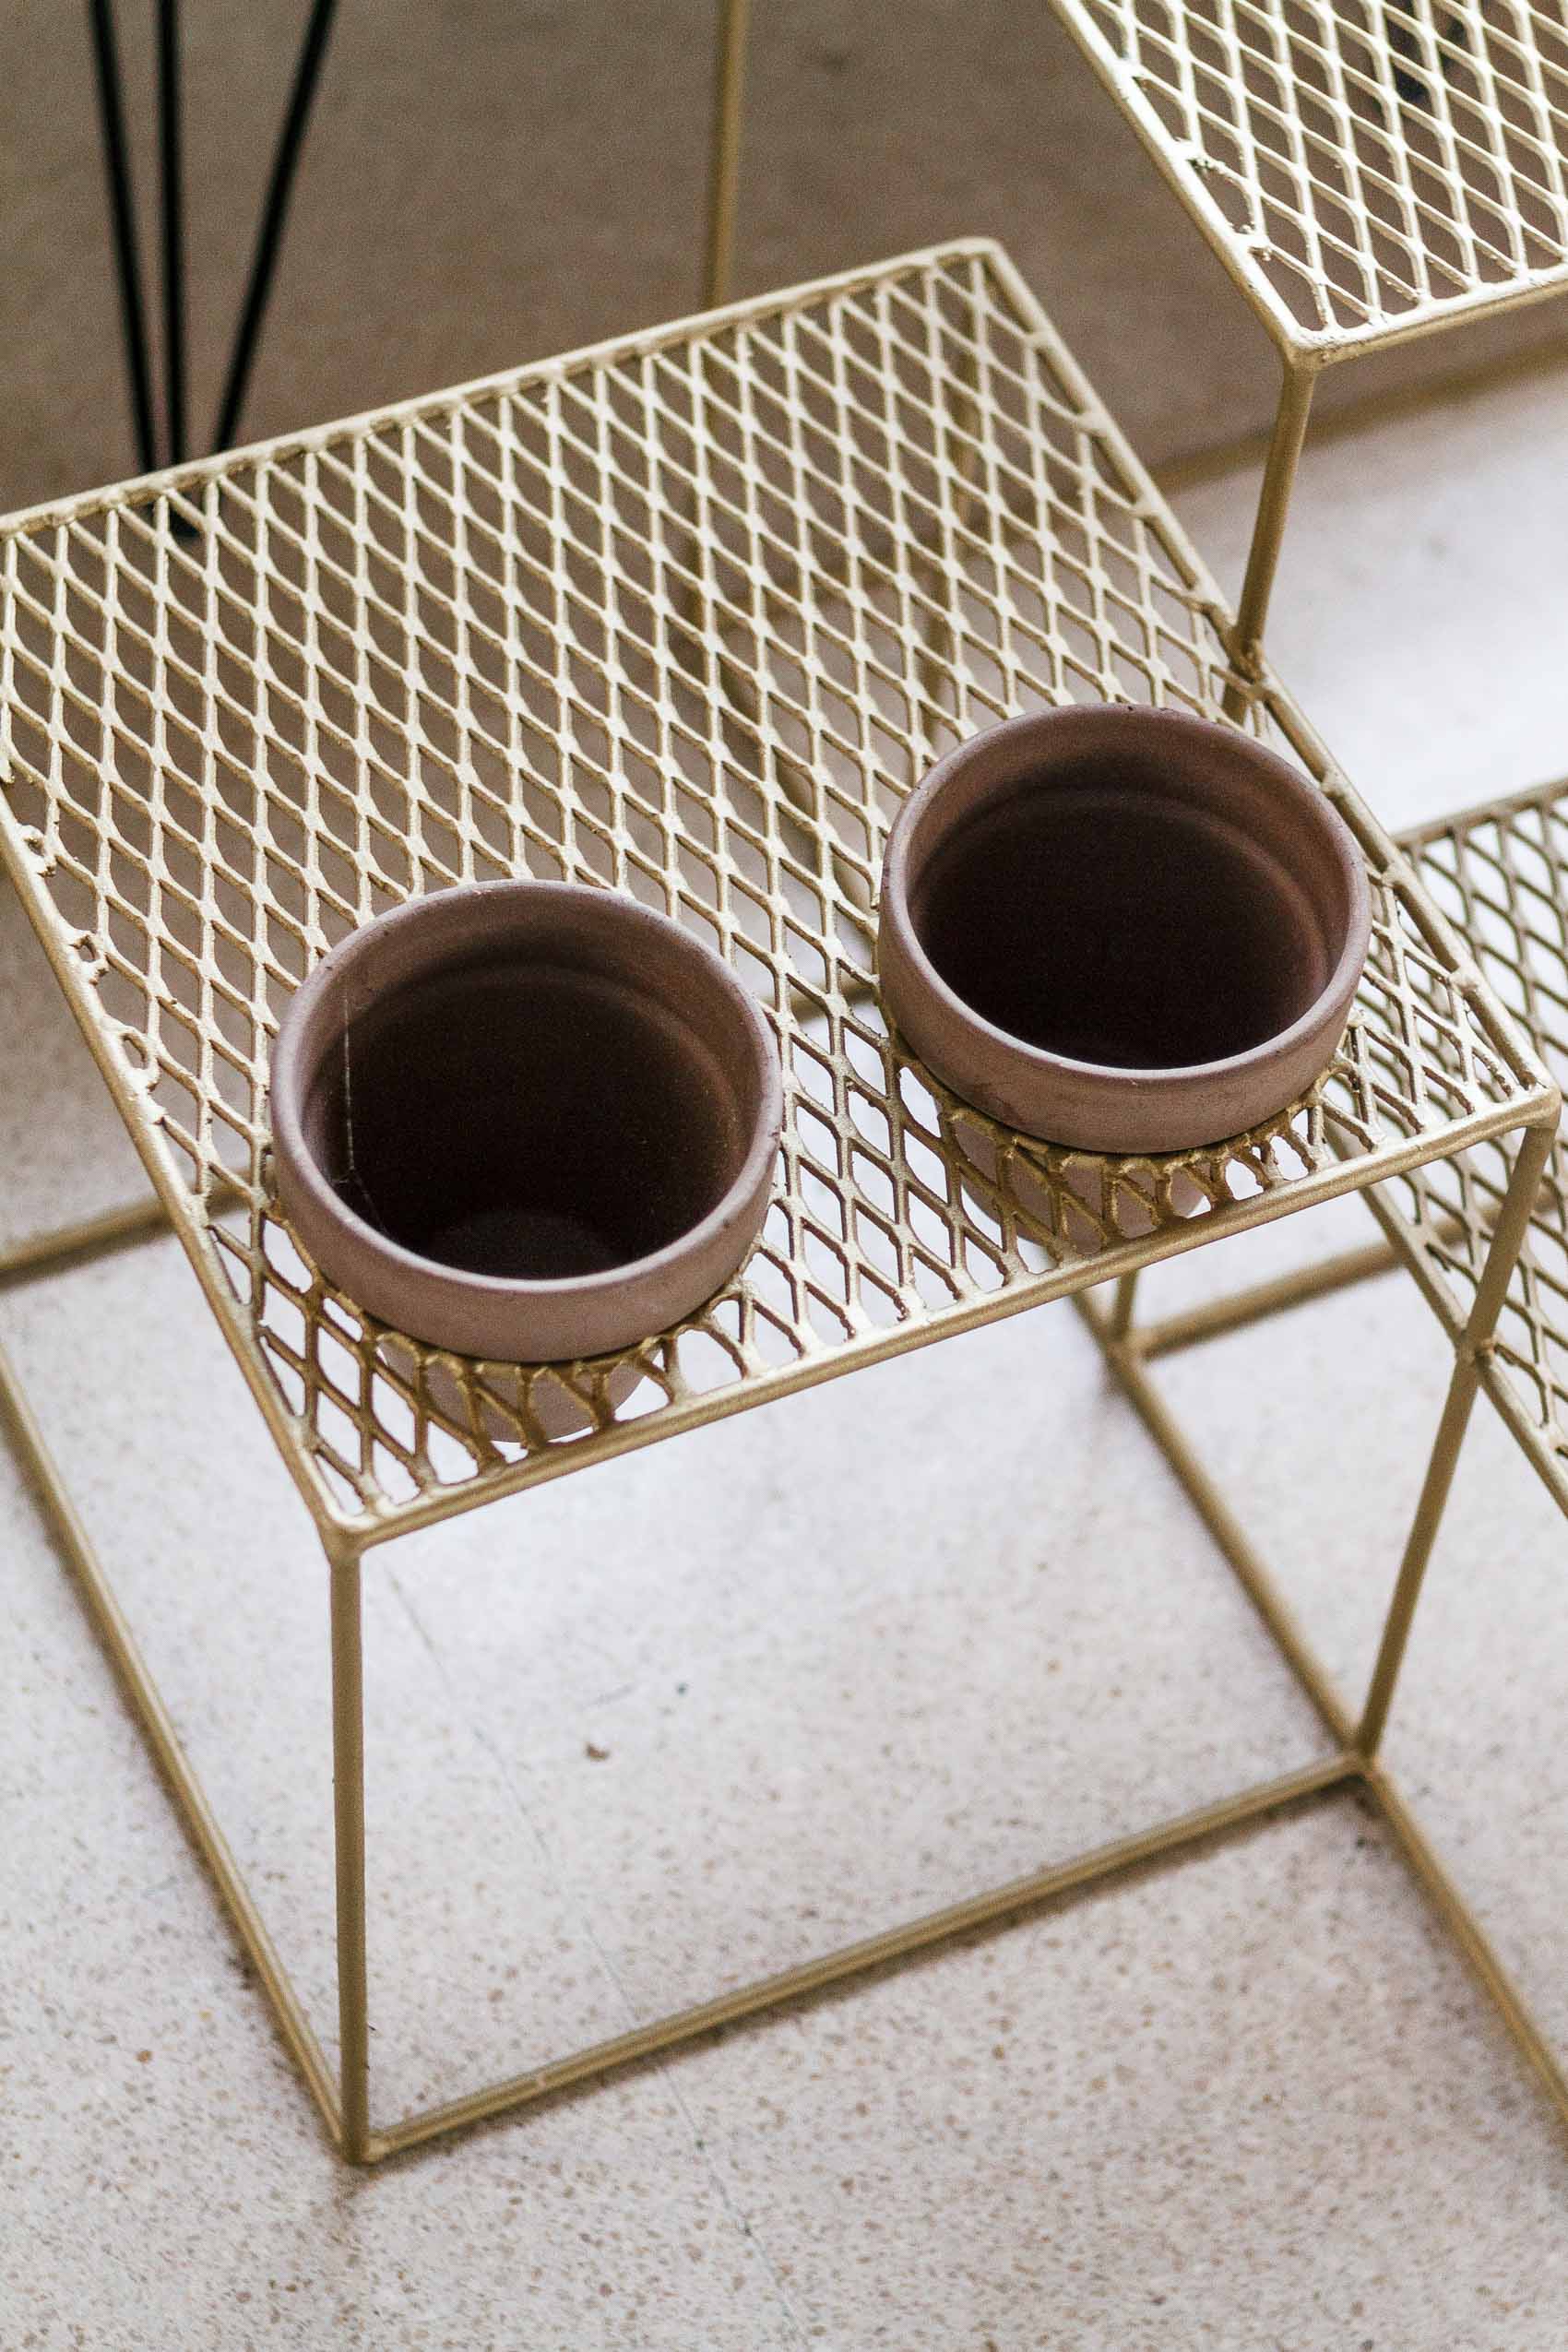 Minimalist geometric planter design by furniture designer and architect Sofia Alvarado